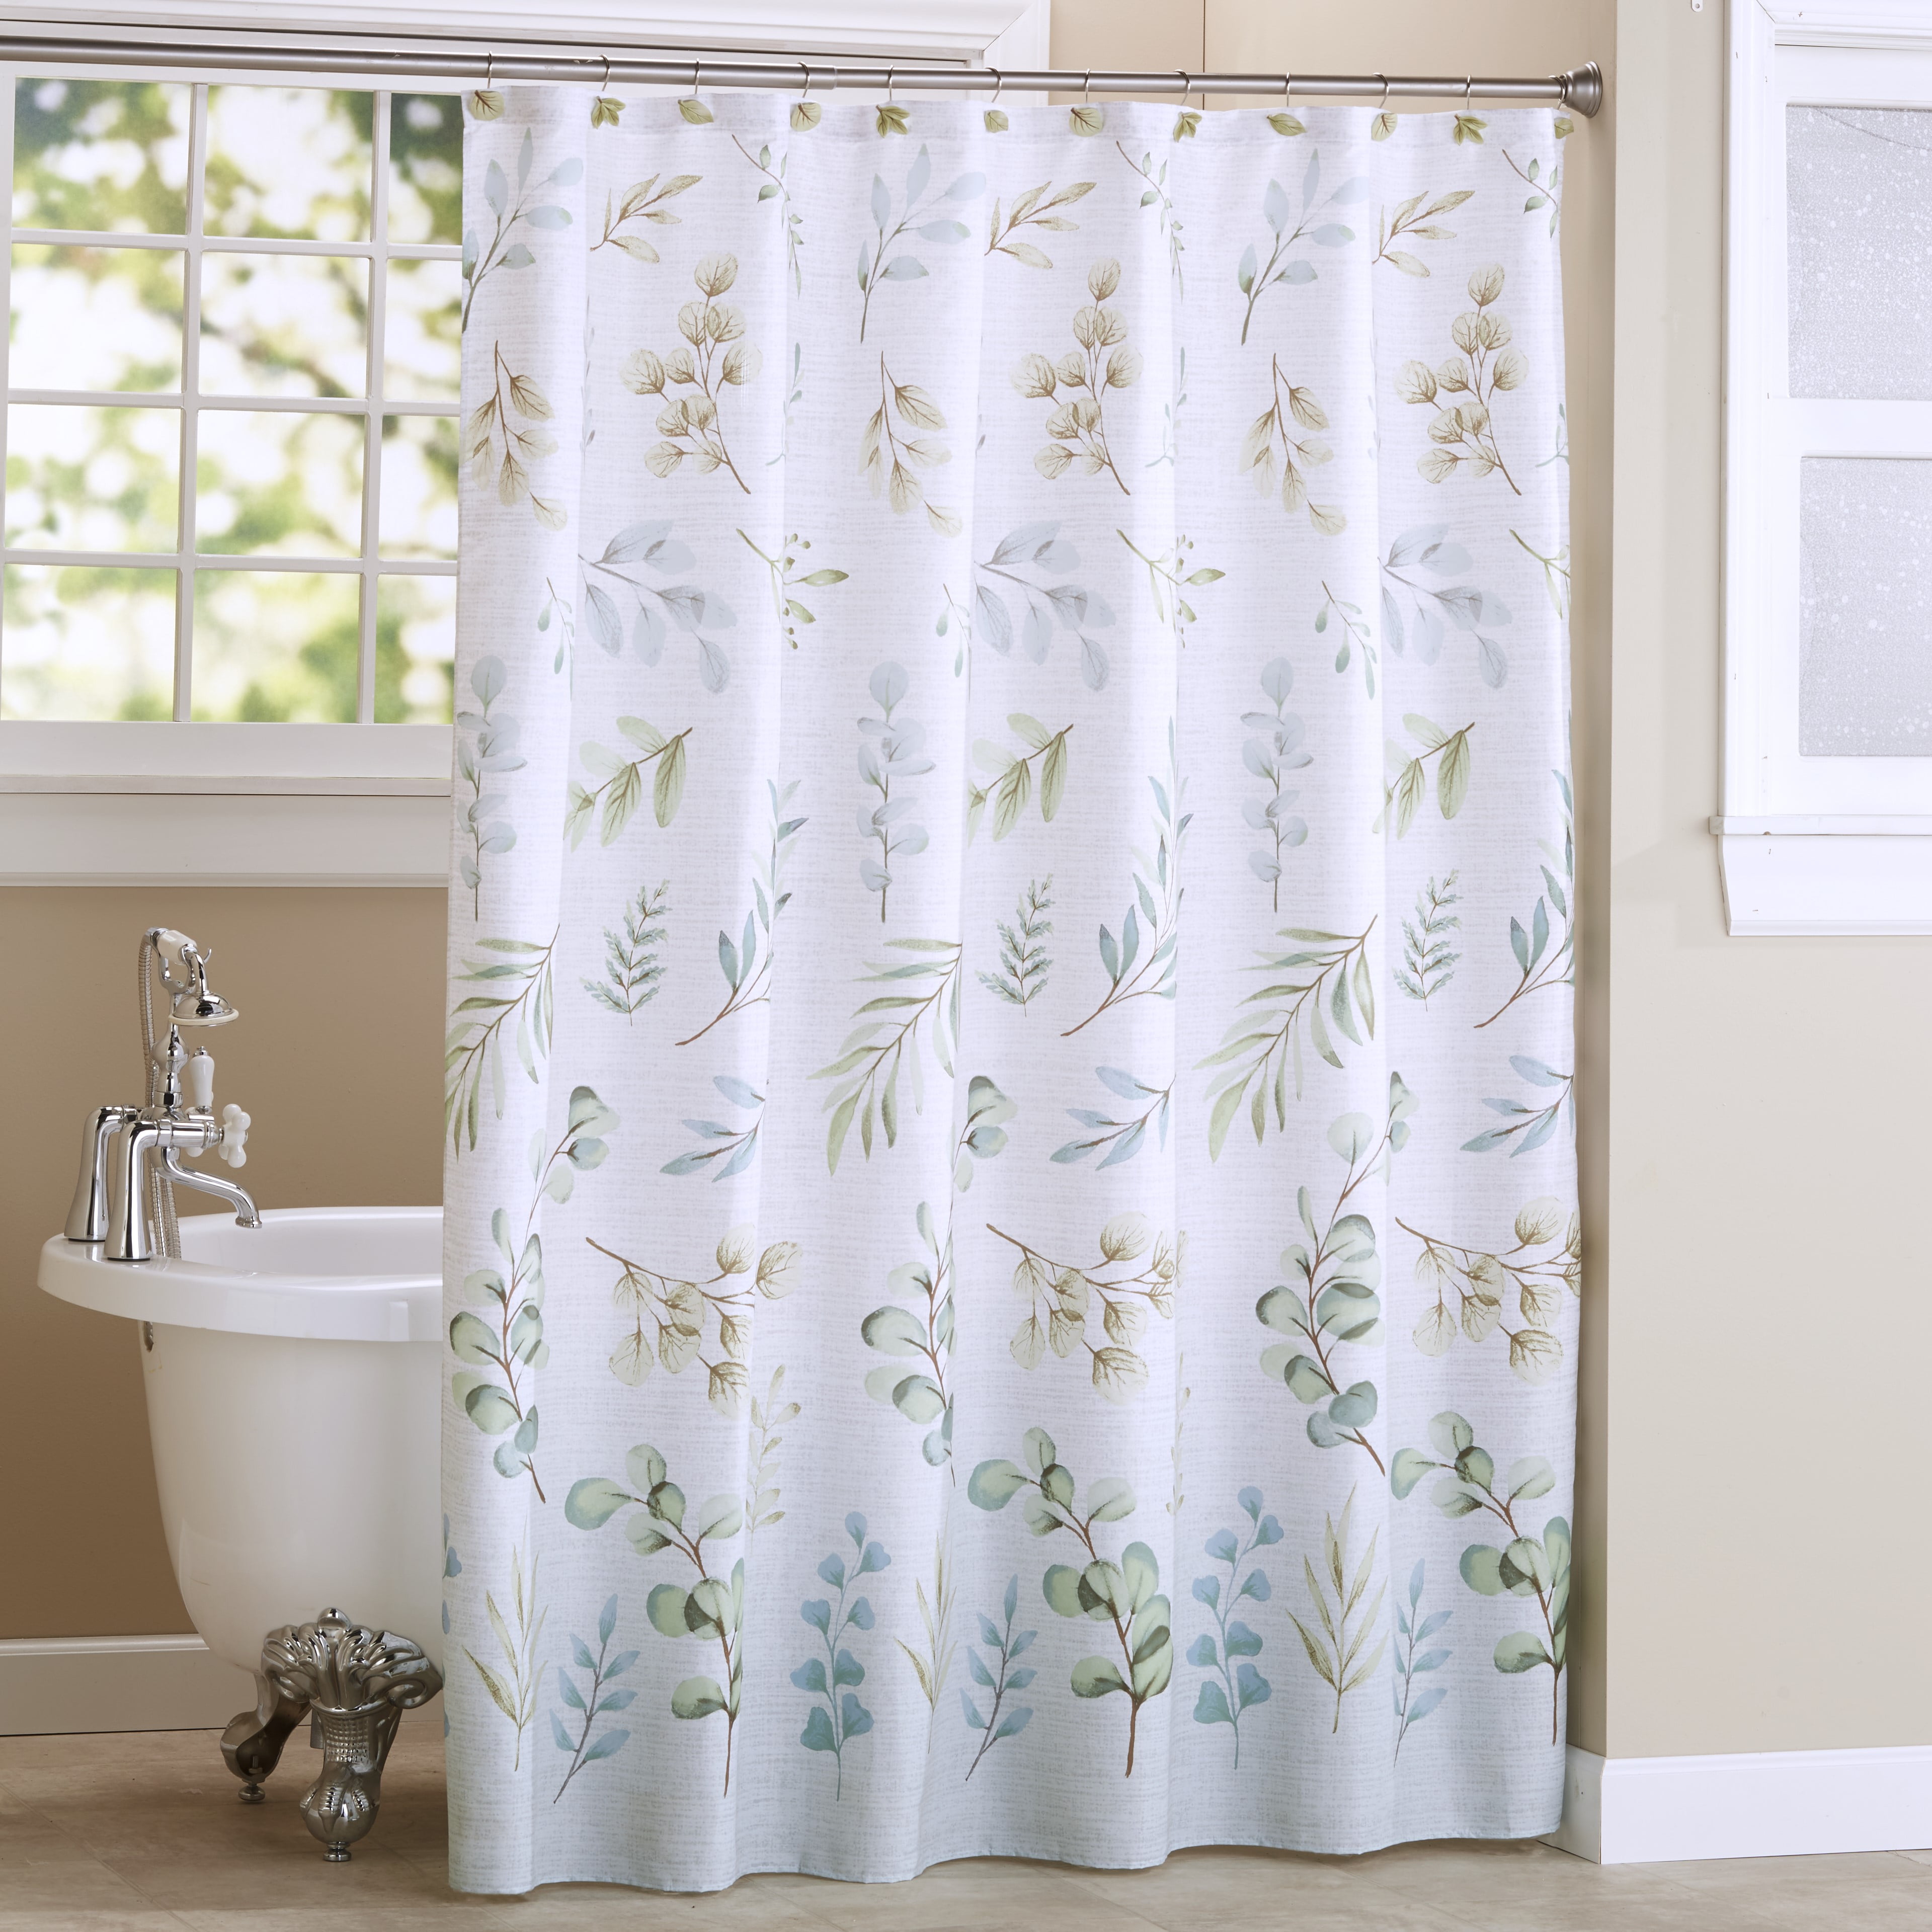 Retro Book Beauty Sleeping Tree Waterproof Fabric Shower Curtain Set Bathroom 